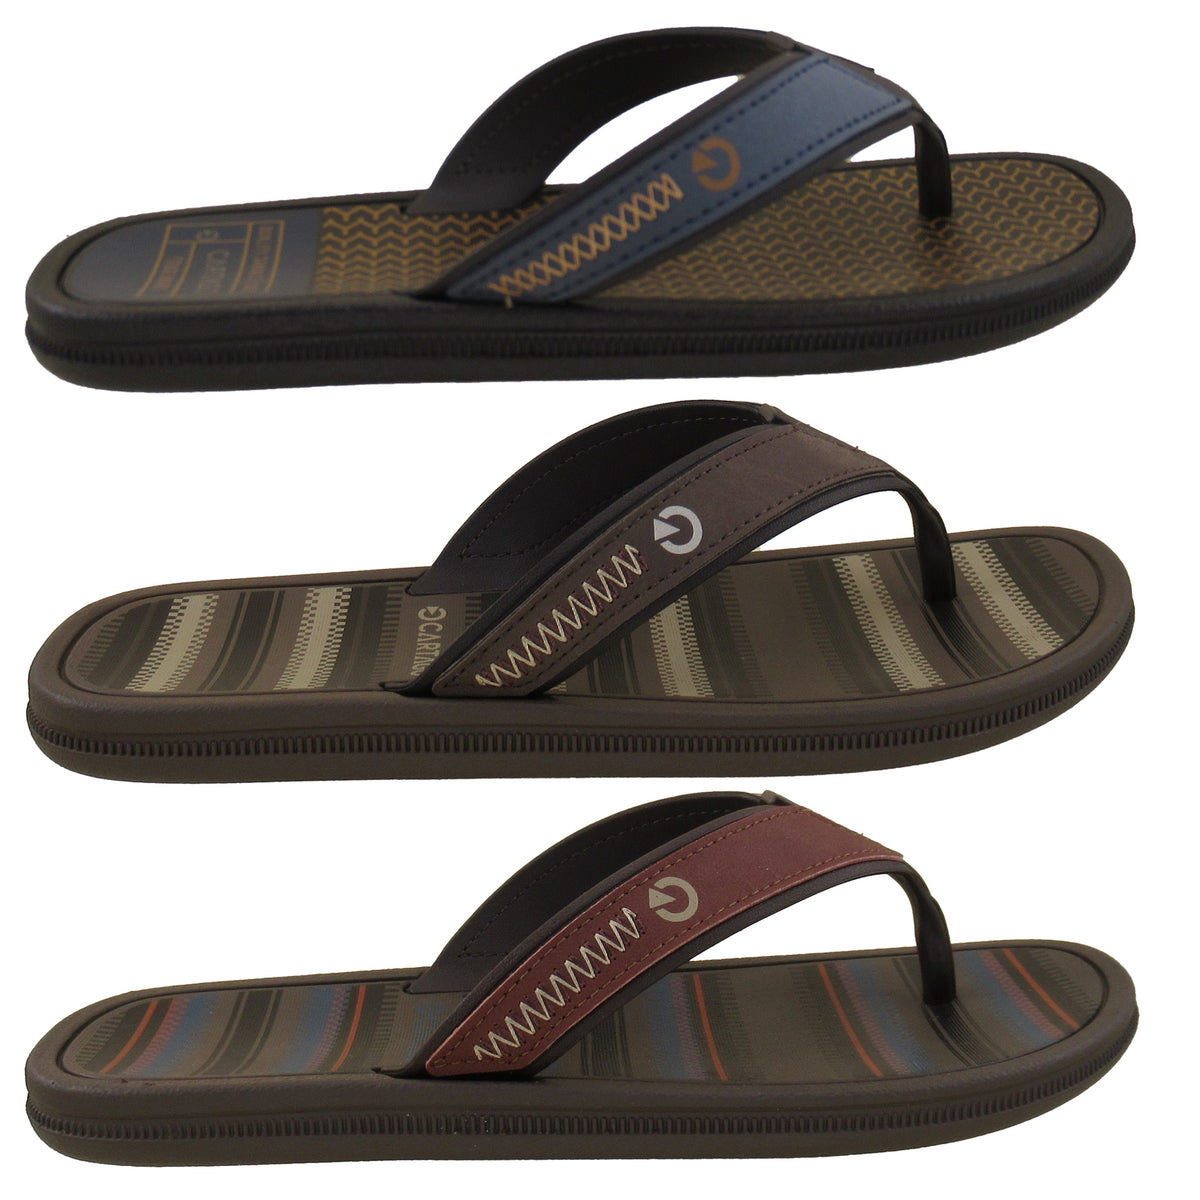 Men's Cartago Maiorca II Flip Flop Sandals – That Shoe Store and More